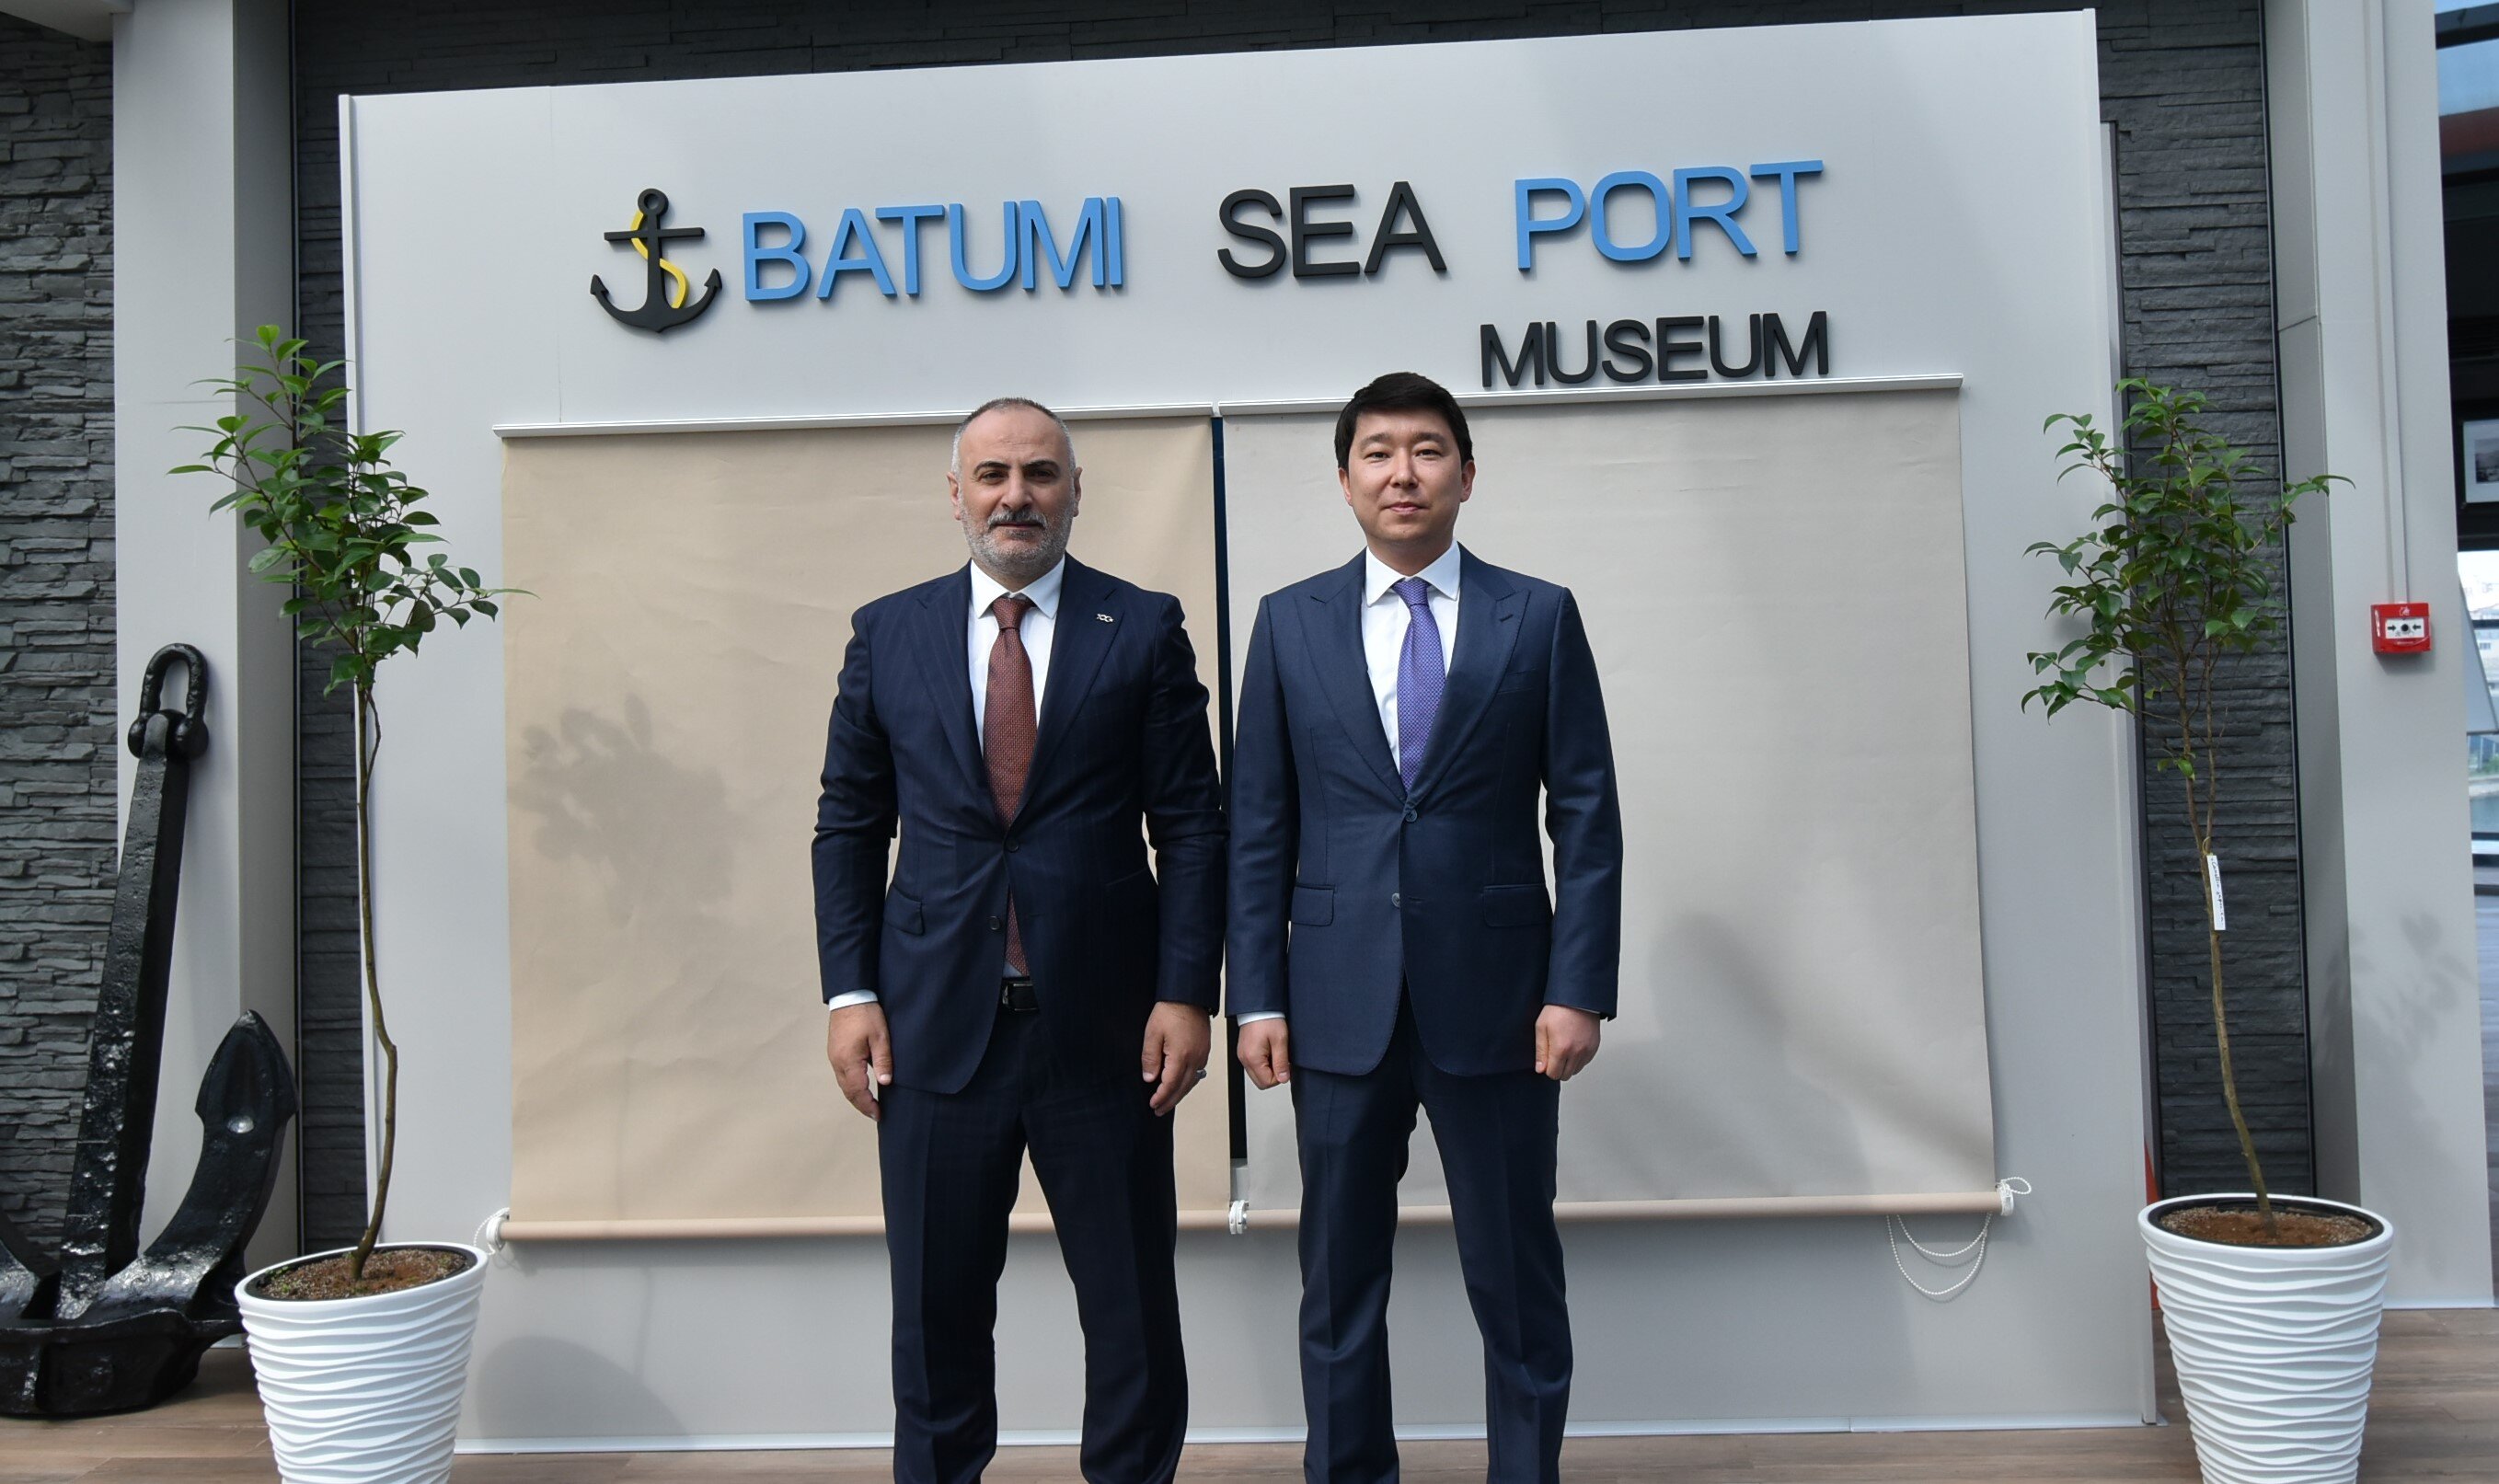 The following delegation from Republic of Turkey visited the Batumi Sea Port Ltd